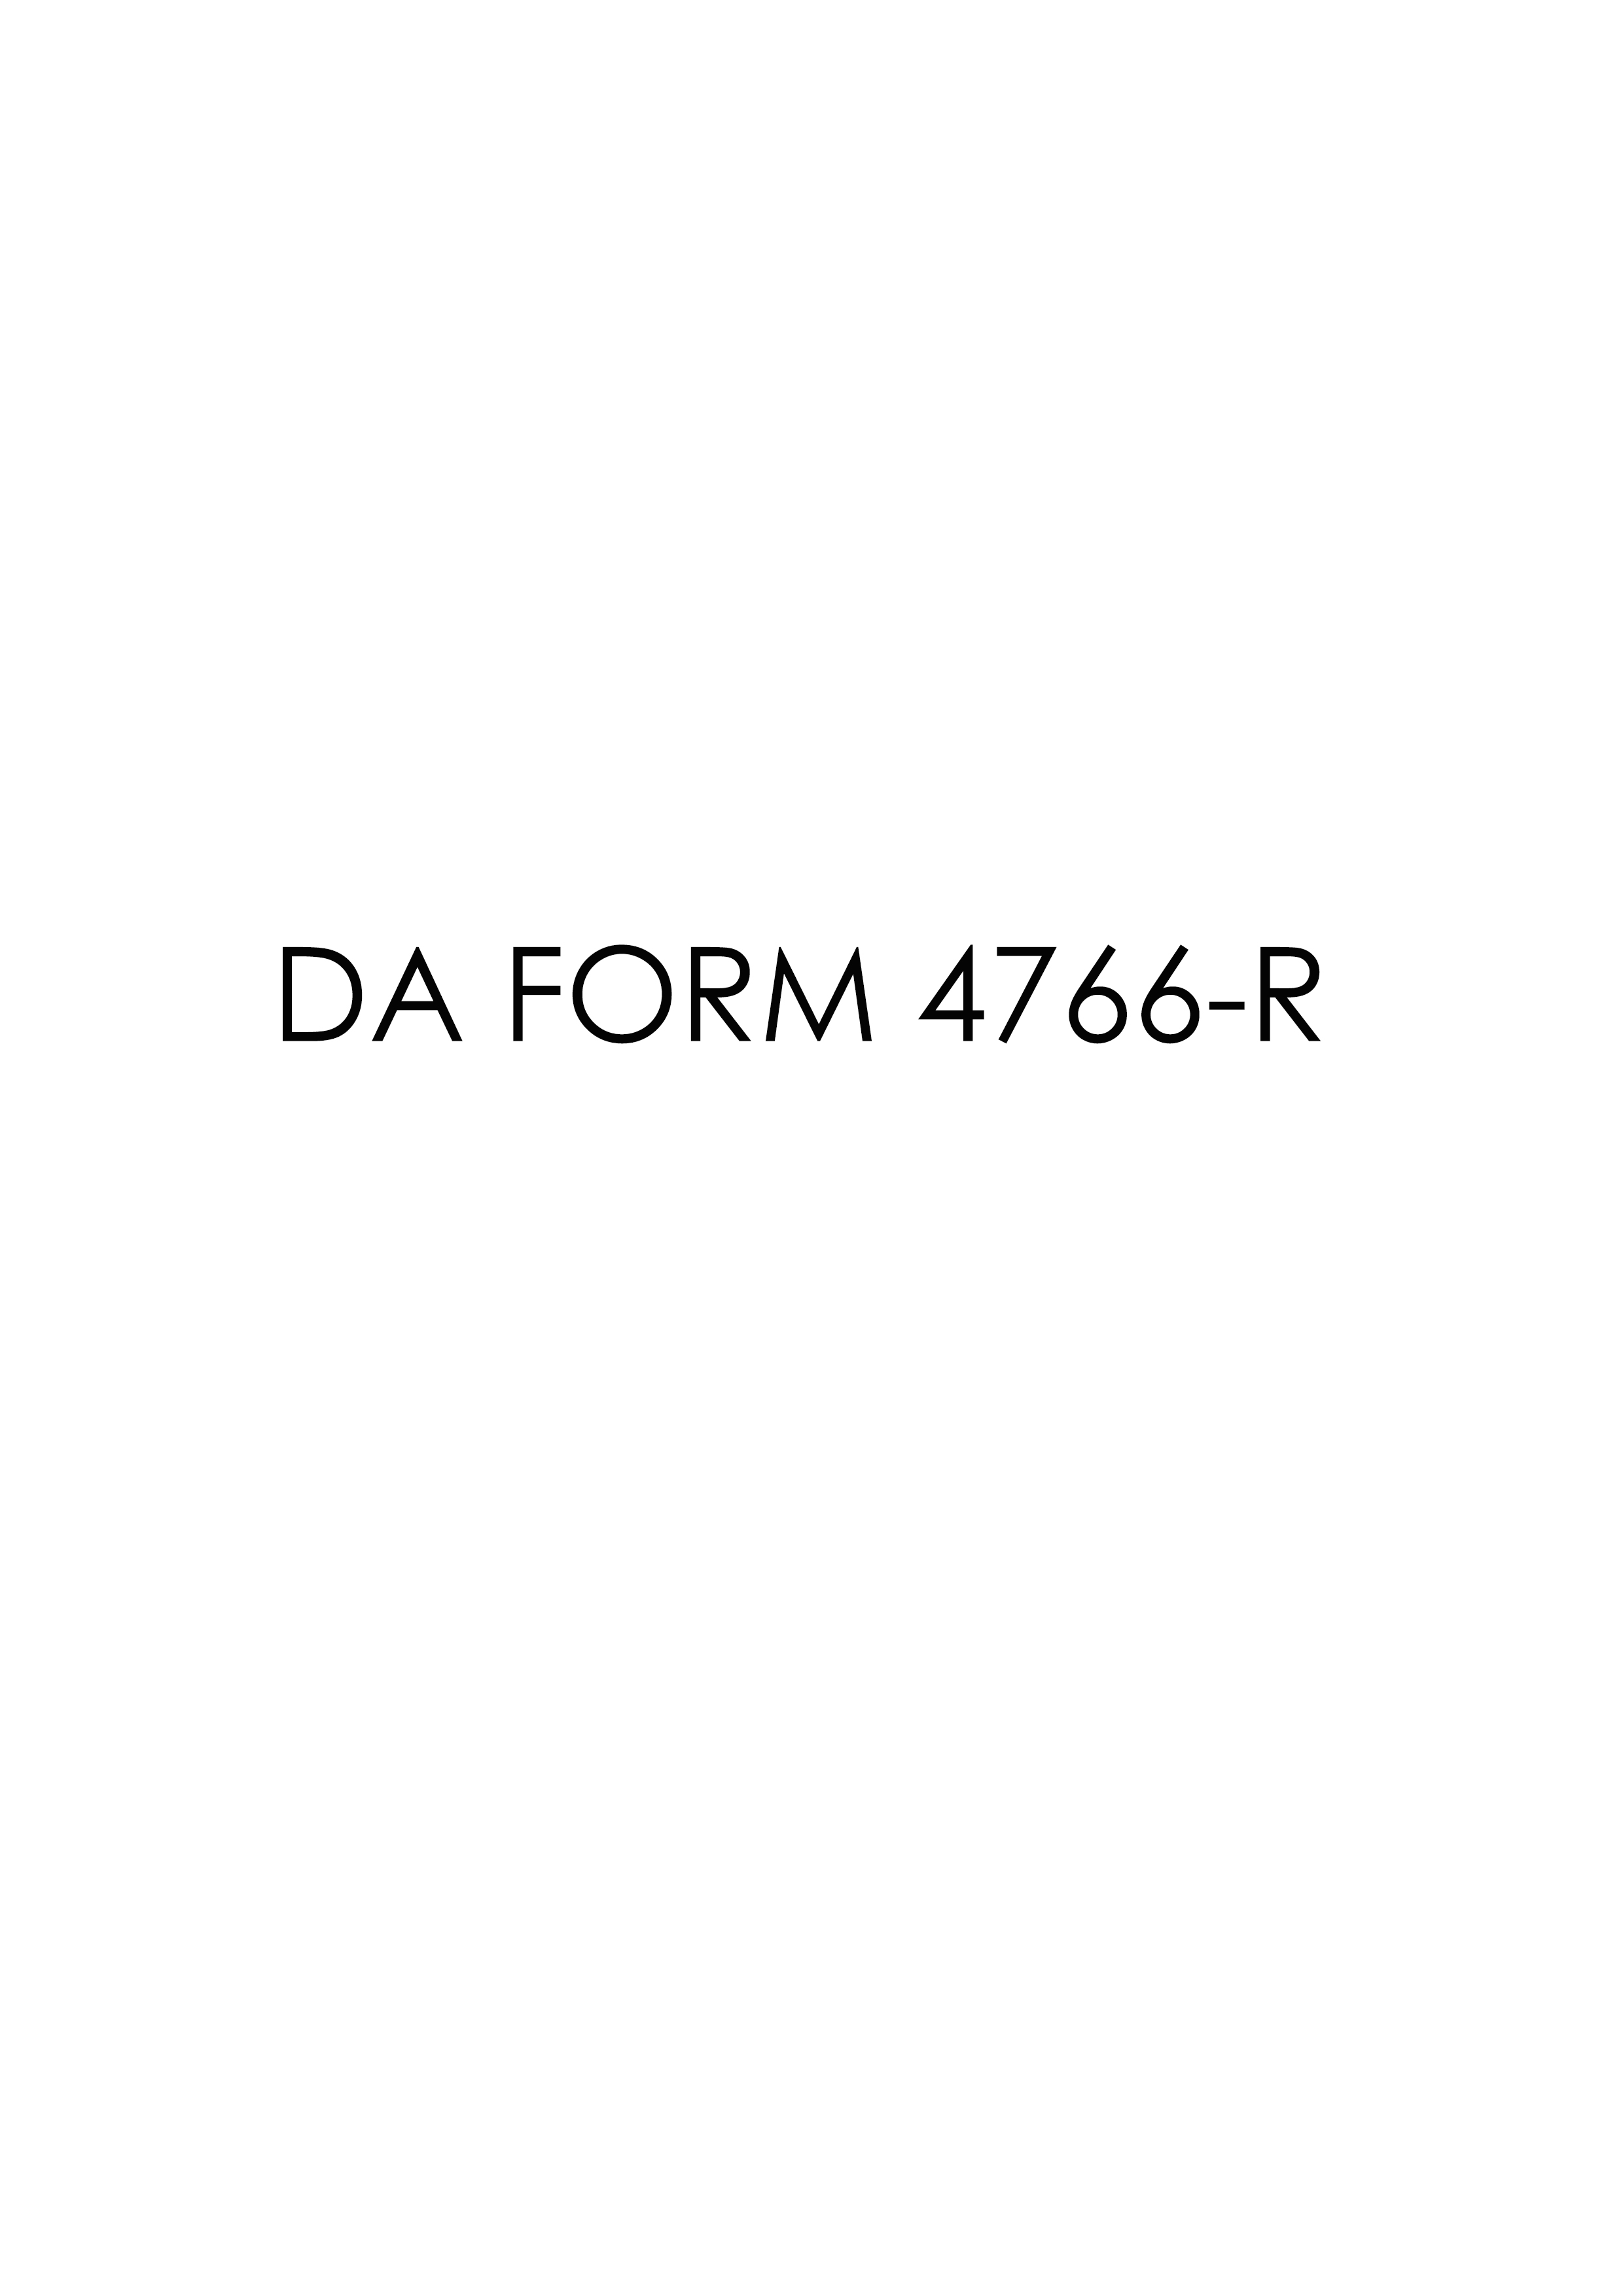 da Form 4766-R fillable